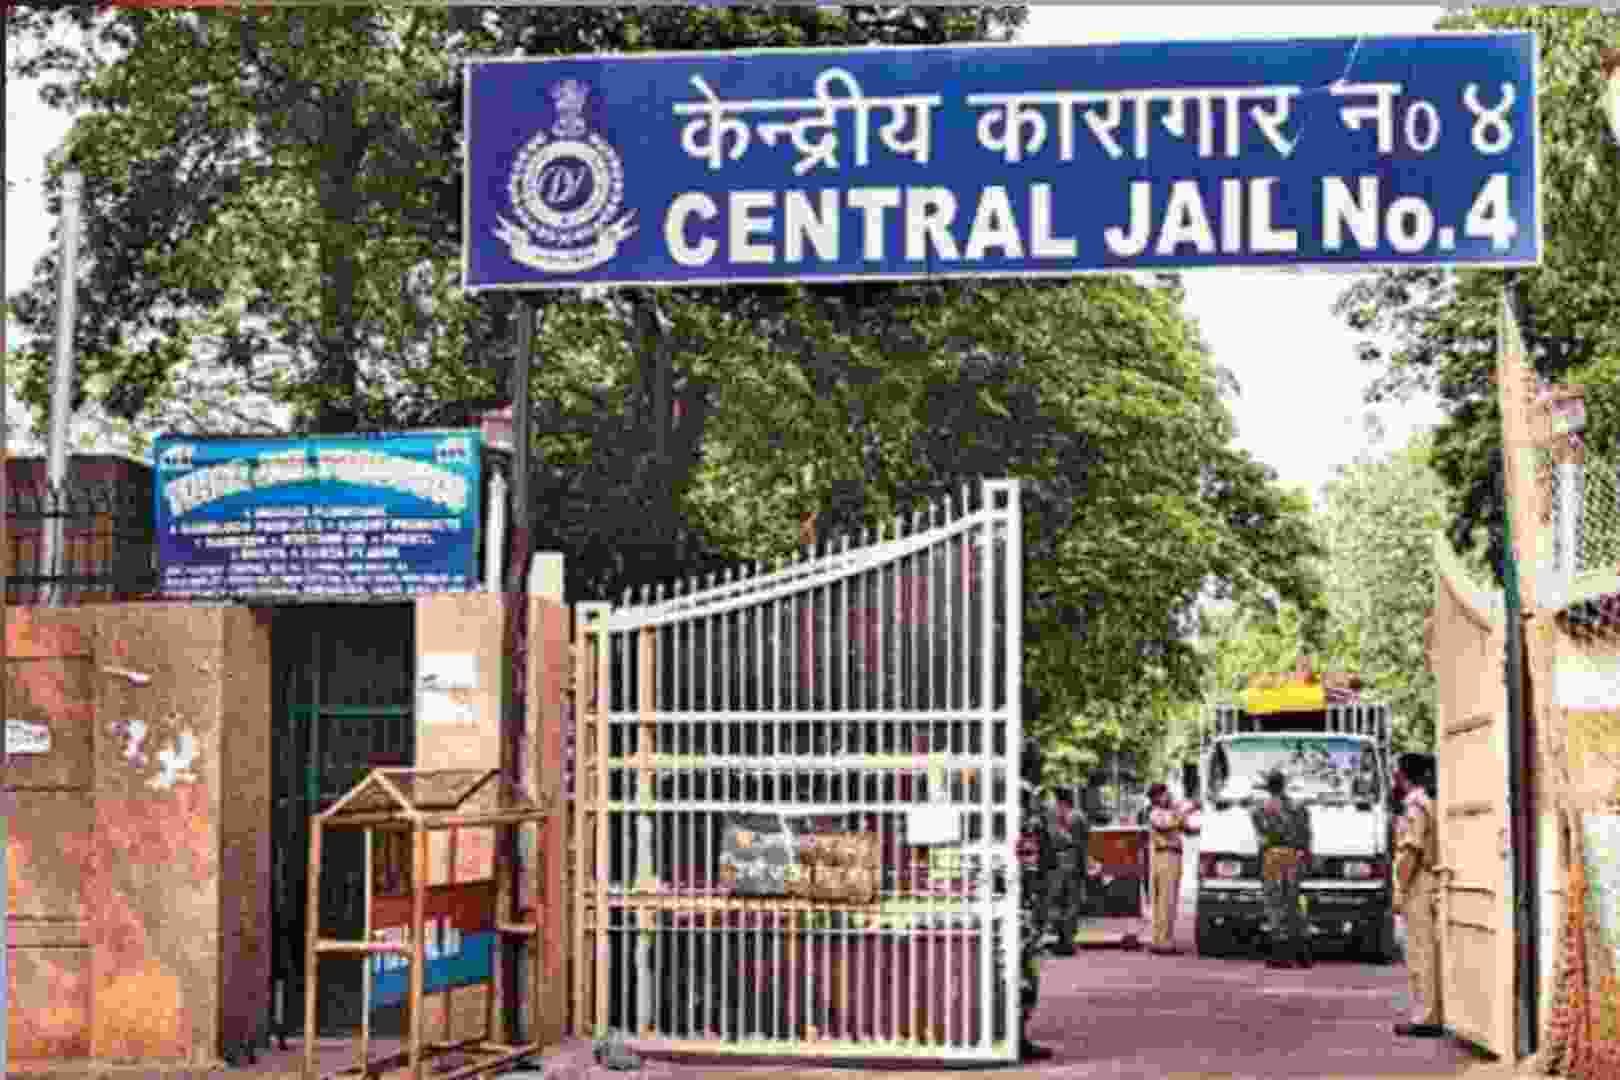 Indian jails start’s releasing prisoners on bail, due to Coronavirus